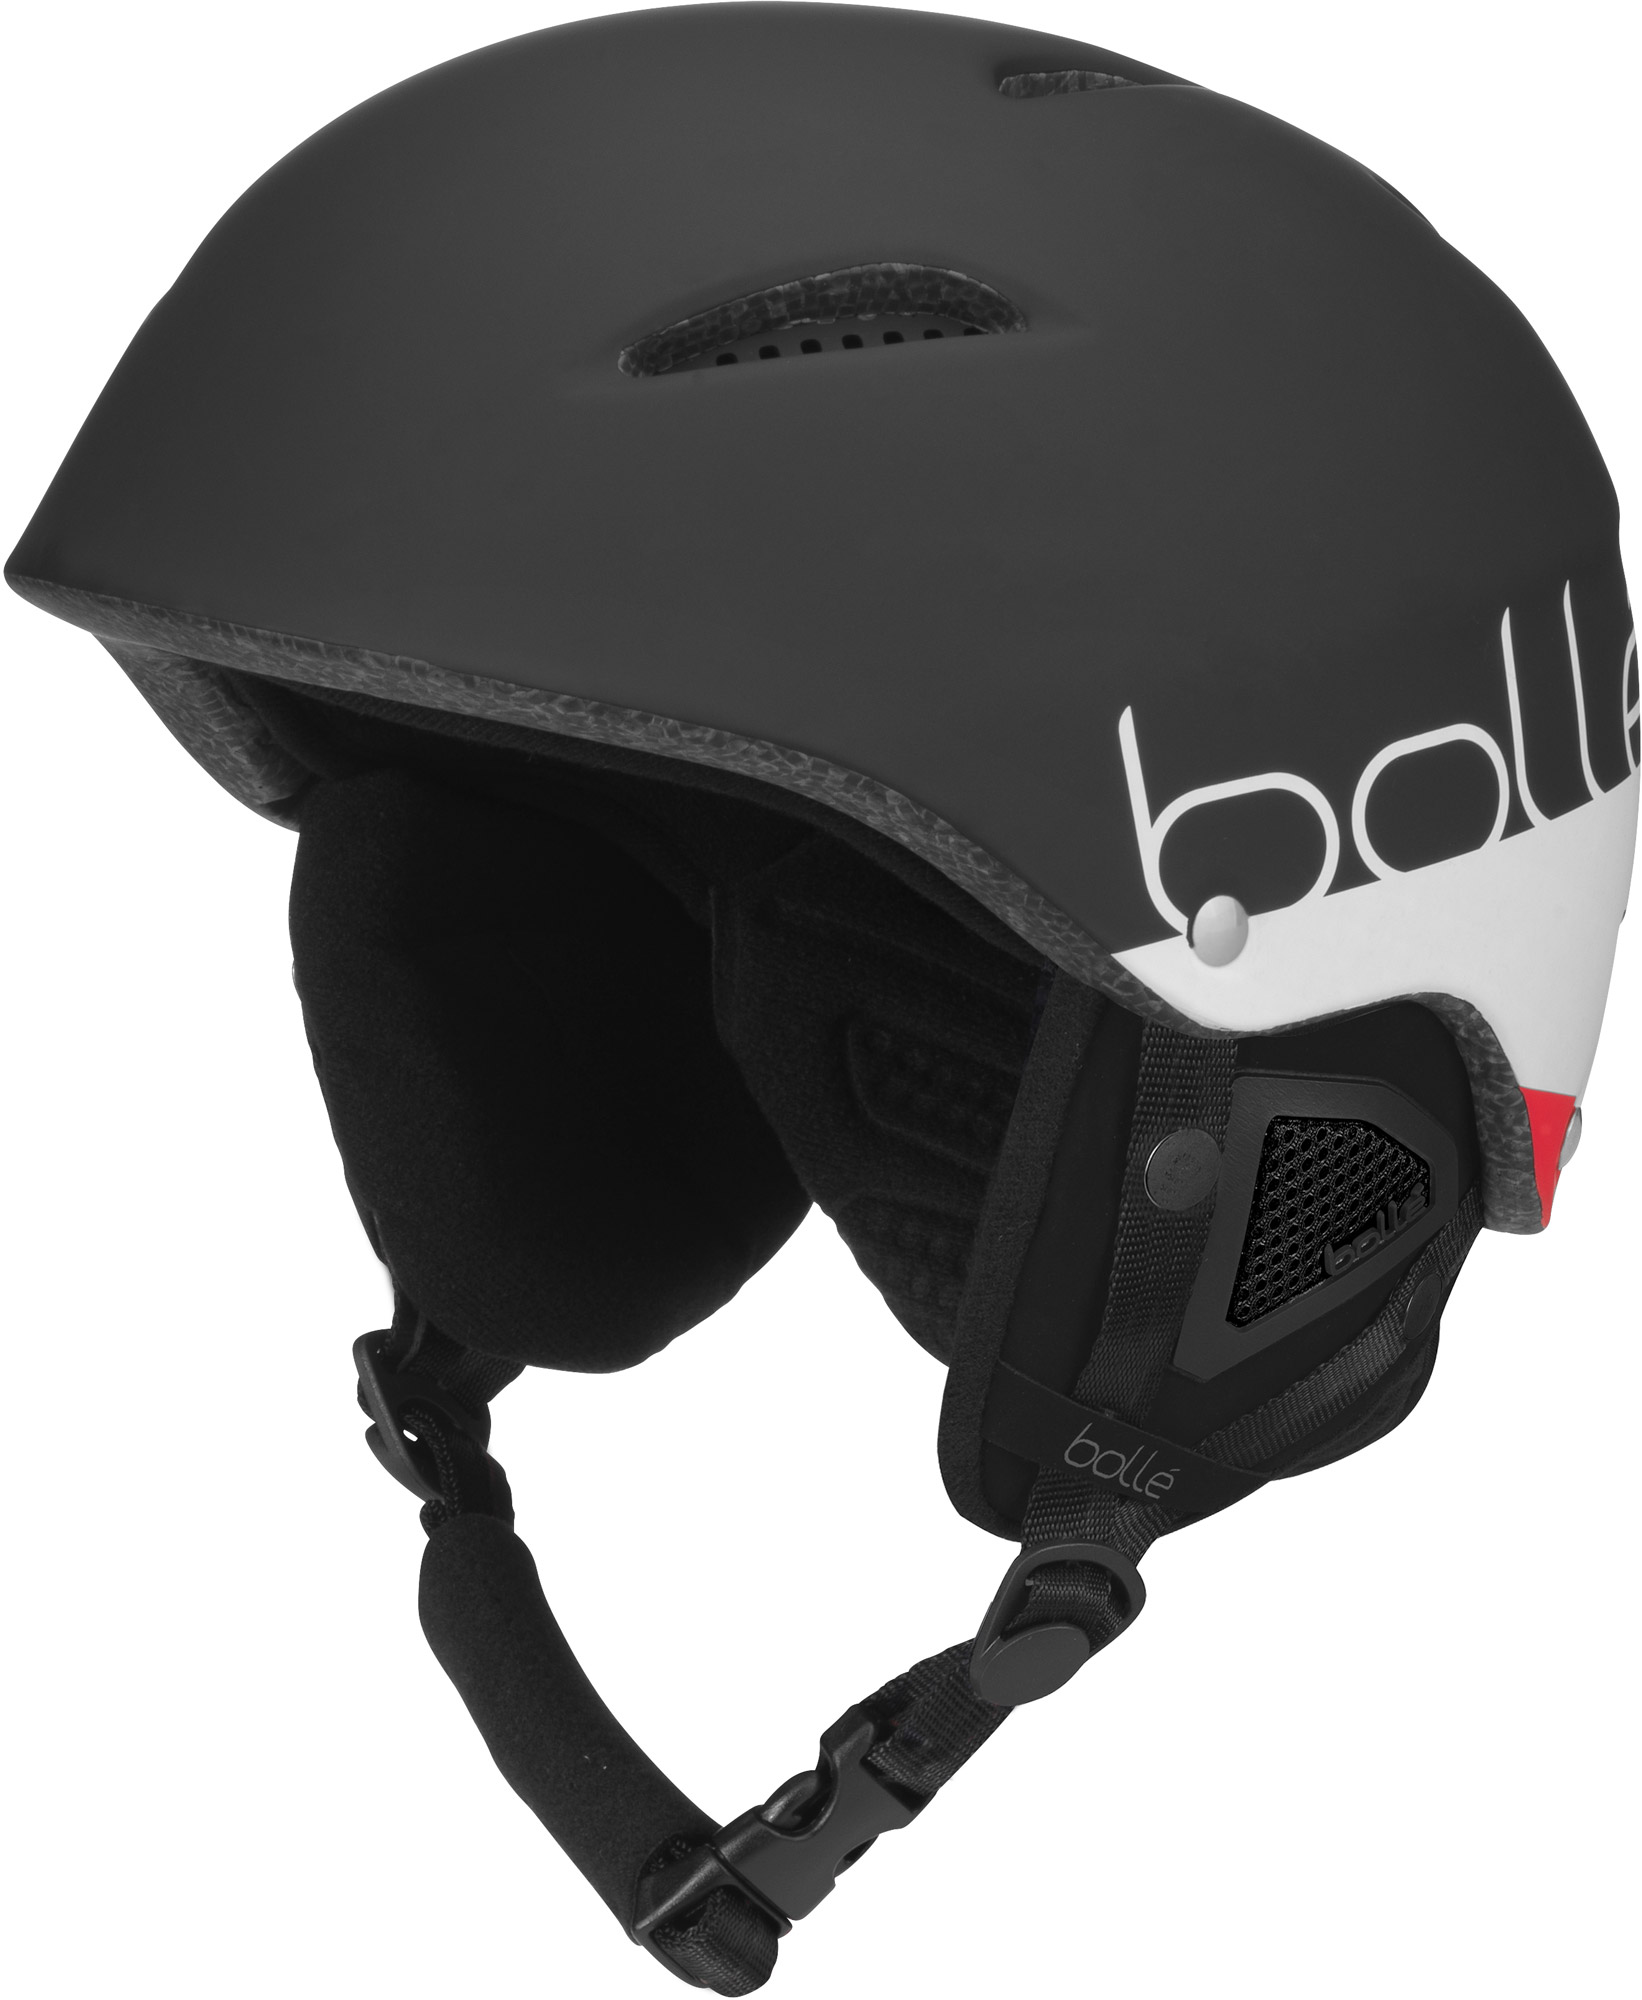 Unisex downhill helmet